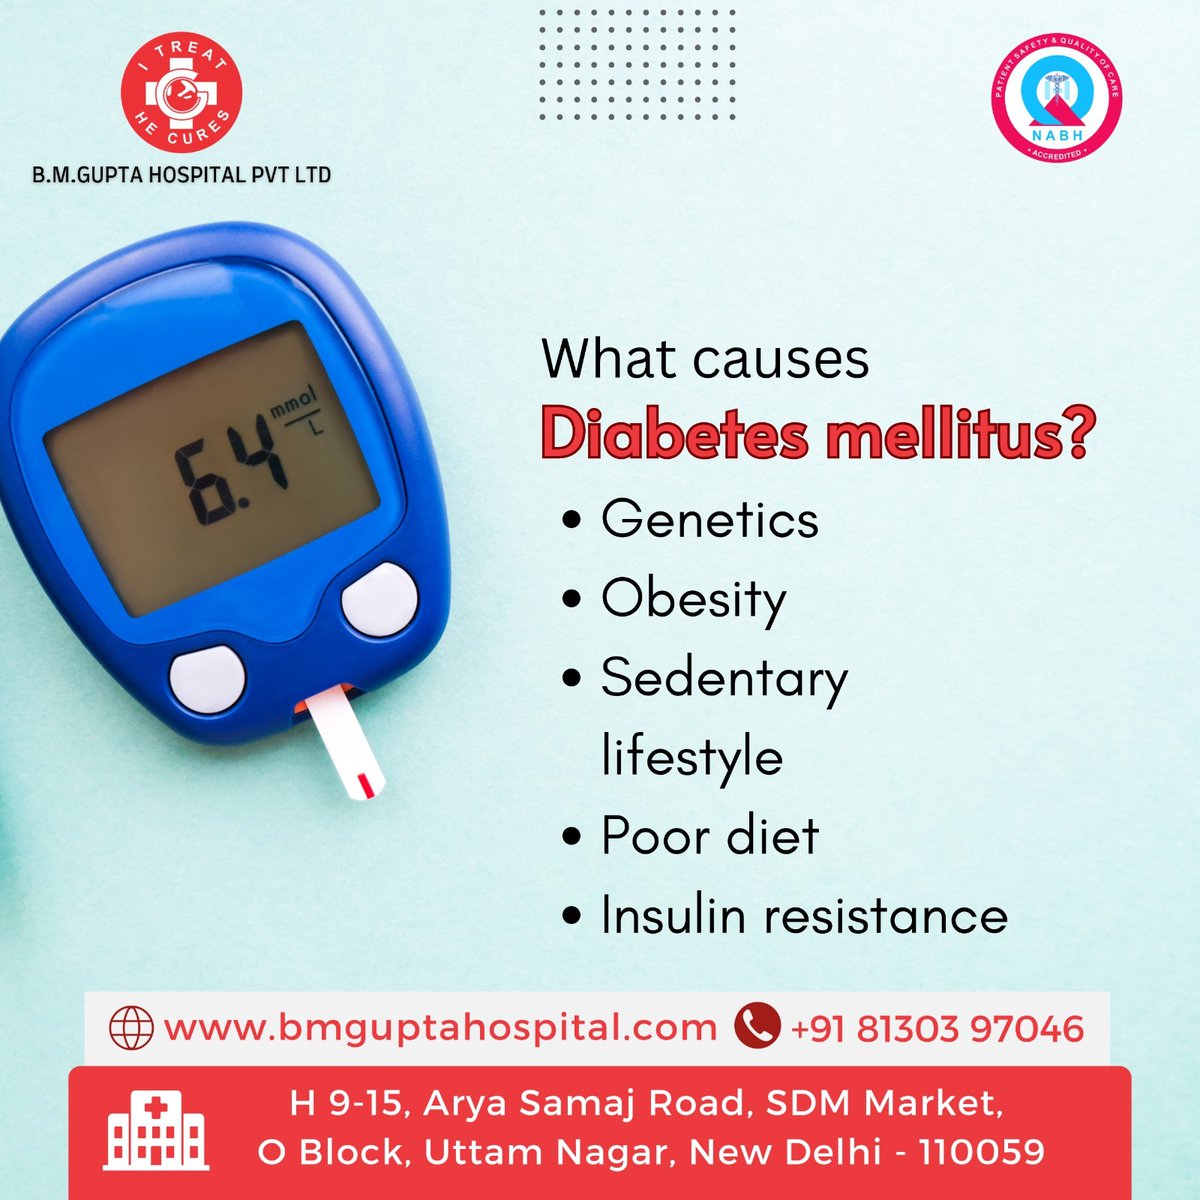 What causes Diabetes mellitus?
For more info 
Call us at  91 81303 97046
Mail us: bmguptagnh@gmail.com
B.M. Gupta Hospital Pvt Ltd

#BMGH #BMGuptaHospital #health #healthcare #IBD #DiabetesCauses #BloodSugarImbalance #InsulinResistance #GeneticPredisposition #UnhealthyLifestyle